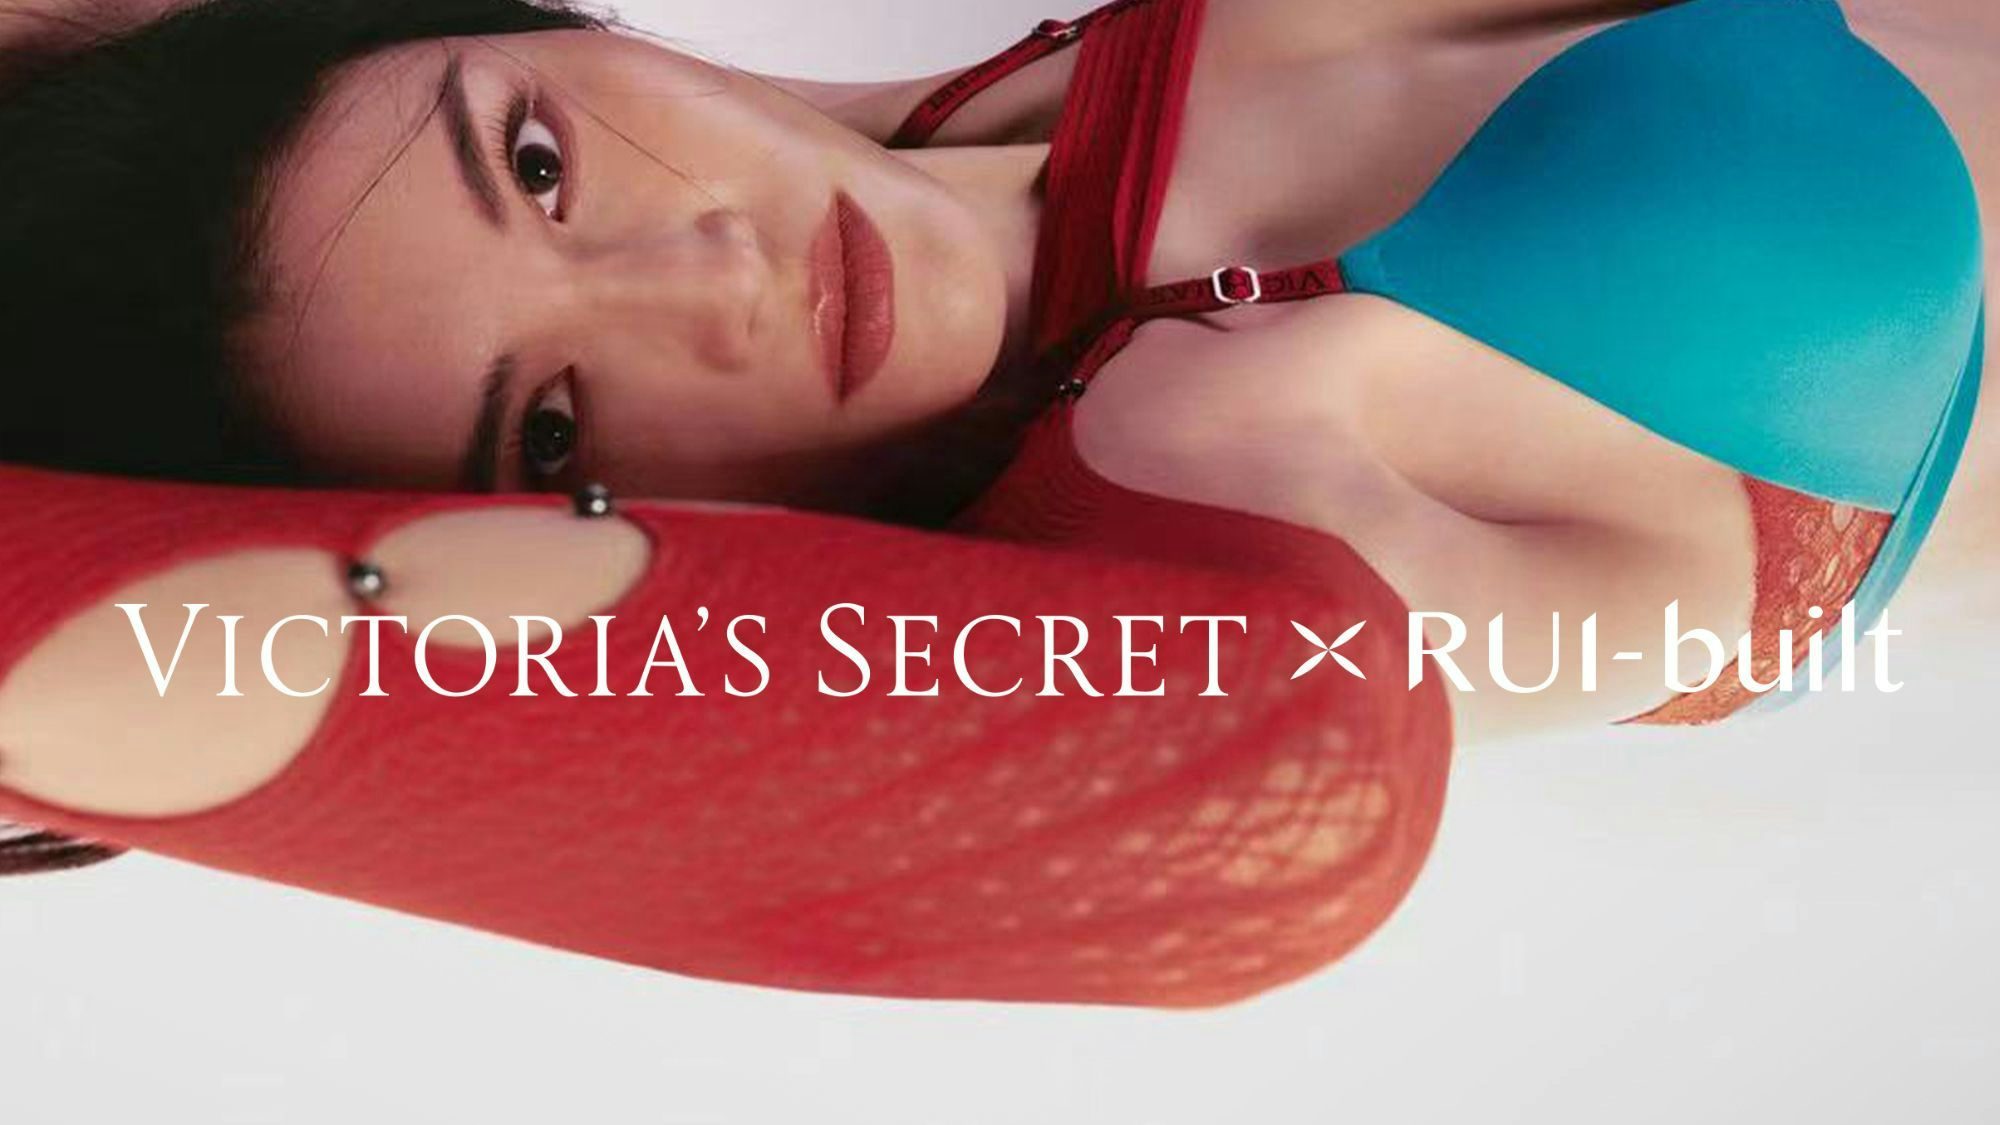 Sex sells: China’s Rui Zhou collaborates with Victoria’s Secret